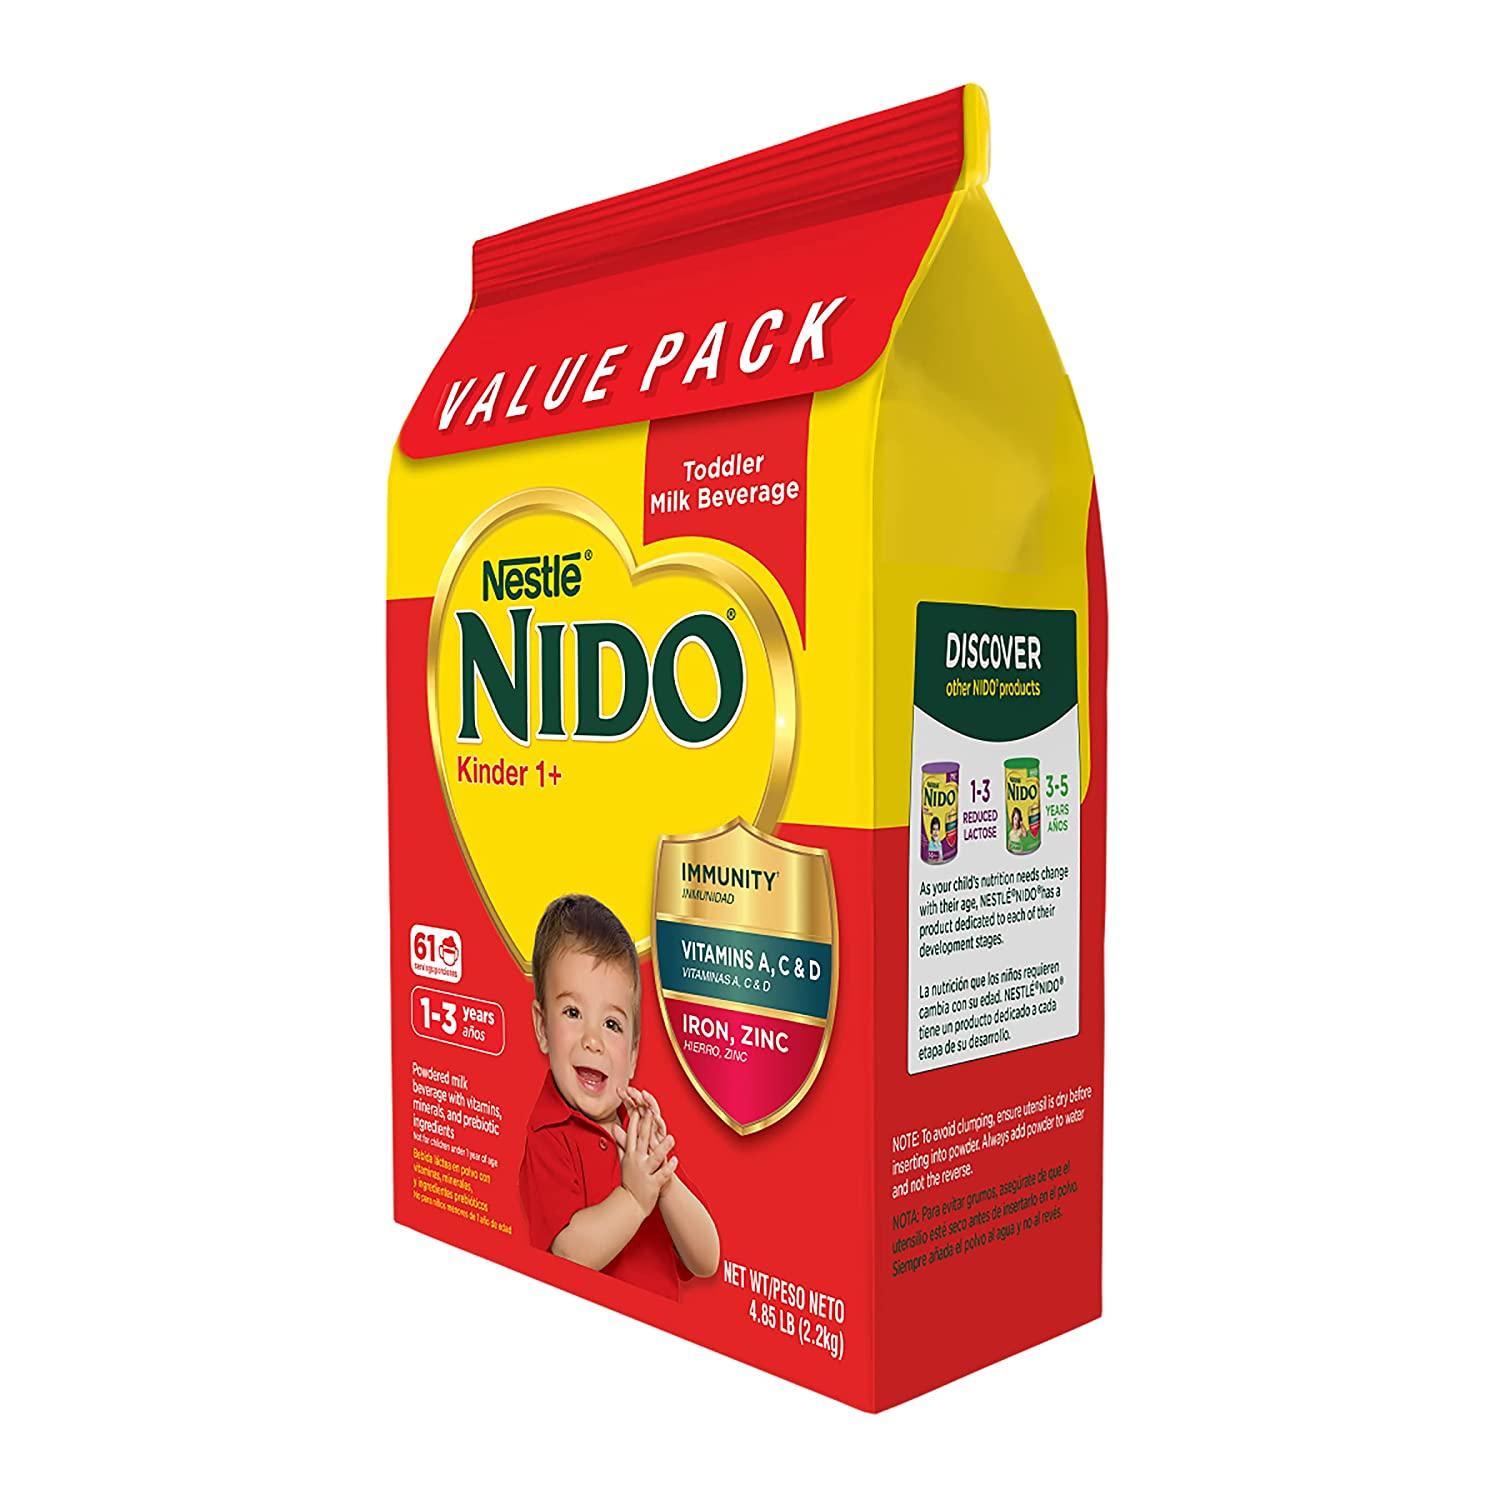 Nestle NIDO Kinder 1+ Toddler Powdered Milk Beverage - Shelf